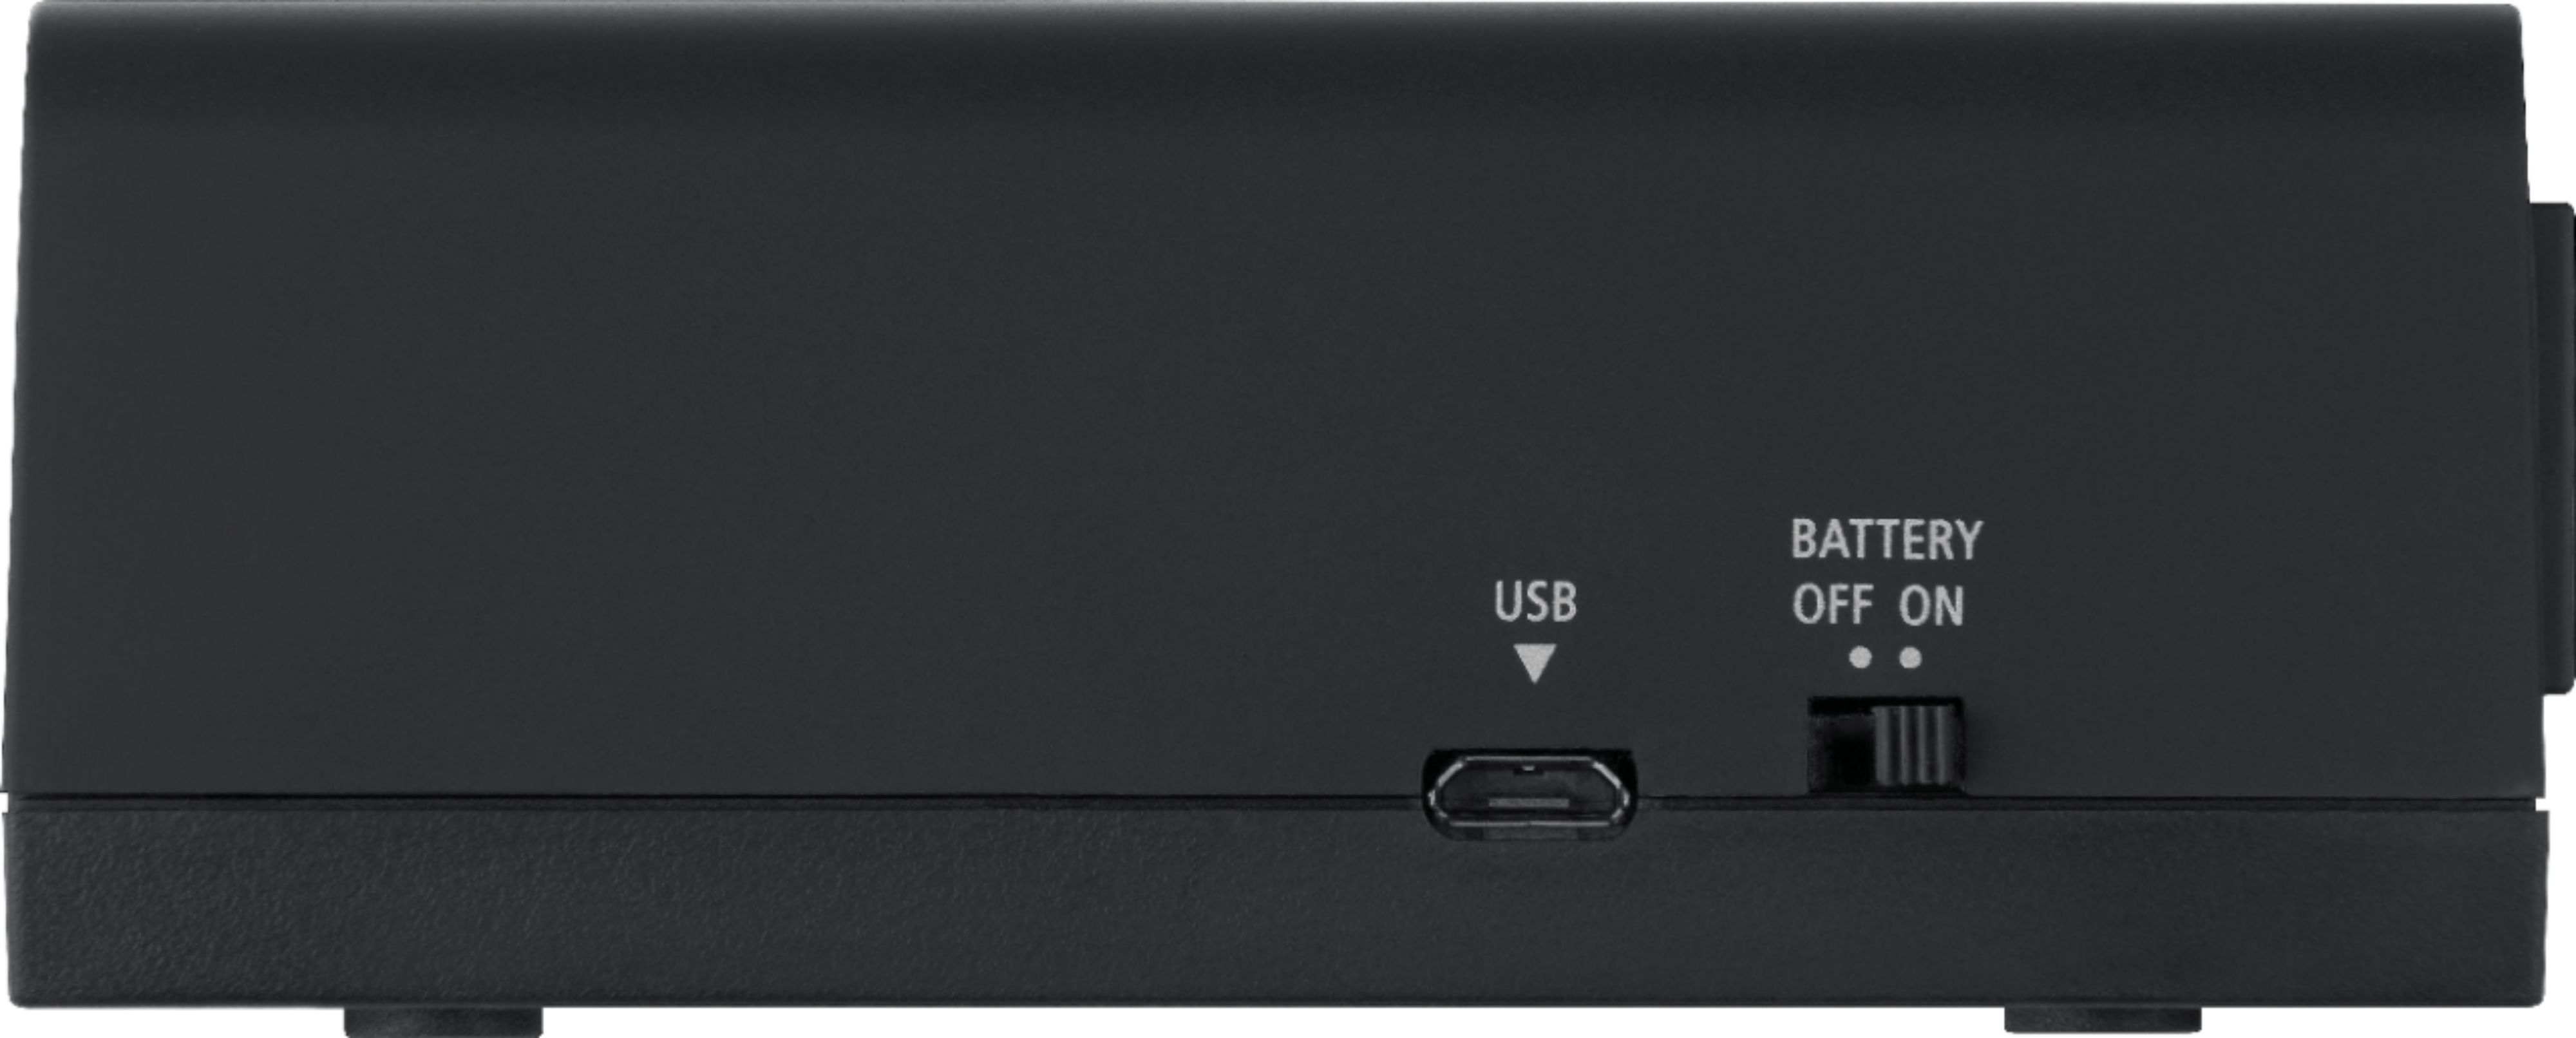 New Roland Go Mixer Pro X Audio Mixer for USB & Battery Powered - AliExpress